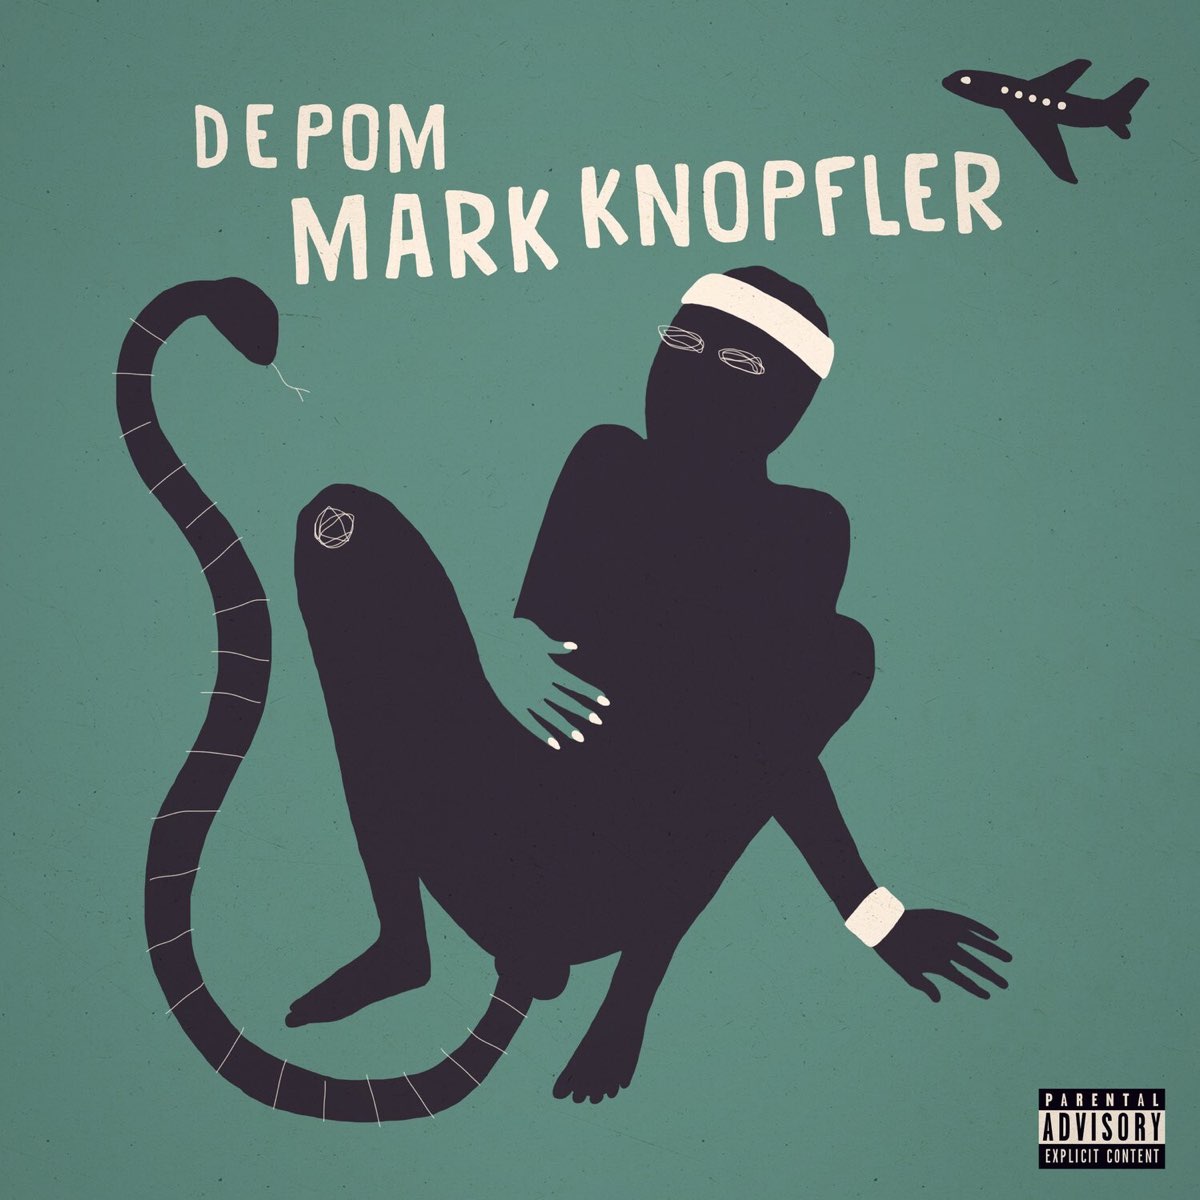 Mark Knopfler - Single by D E POM on Apple